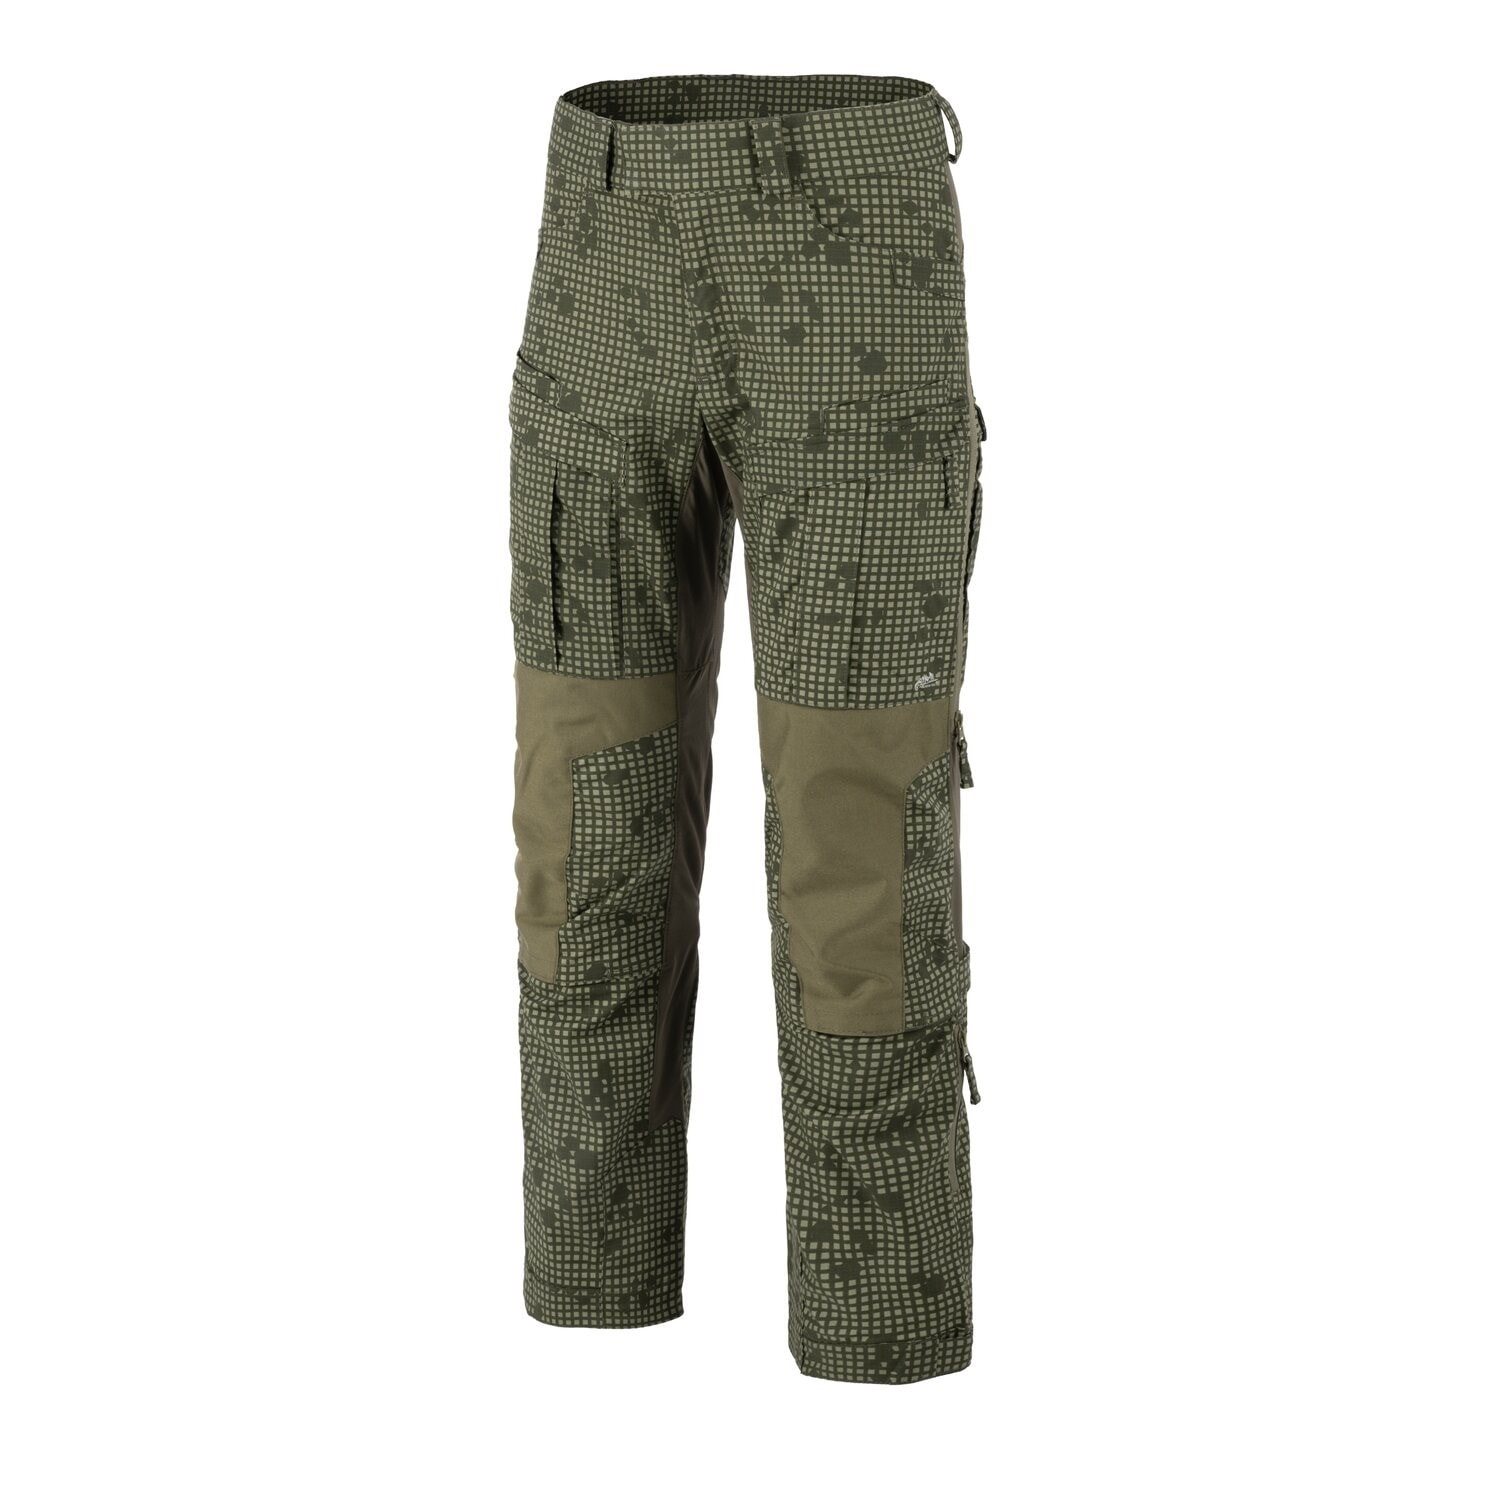 Amazon.com: Black Gunpowder G3 Tactical Combat Pants Military Paintball  Airsoft Hunting Hiking Outdoor Pants (Desert Night Camo,Size 34) : Sports &  Outdoors